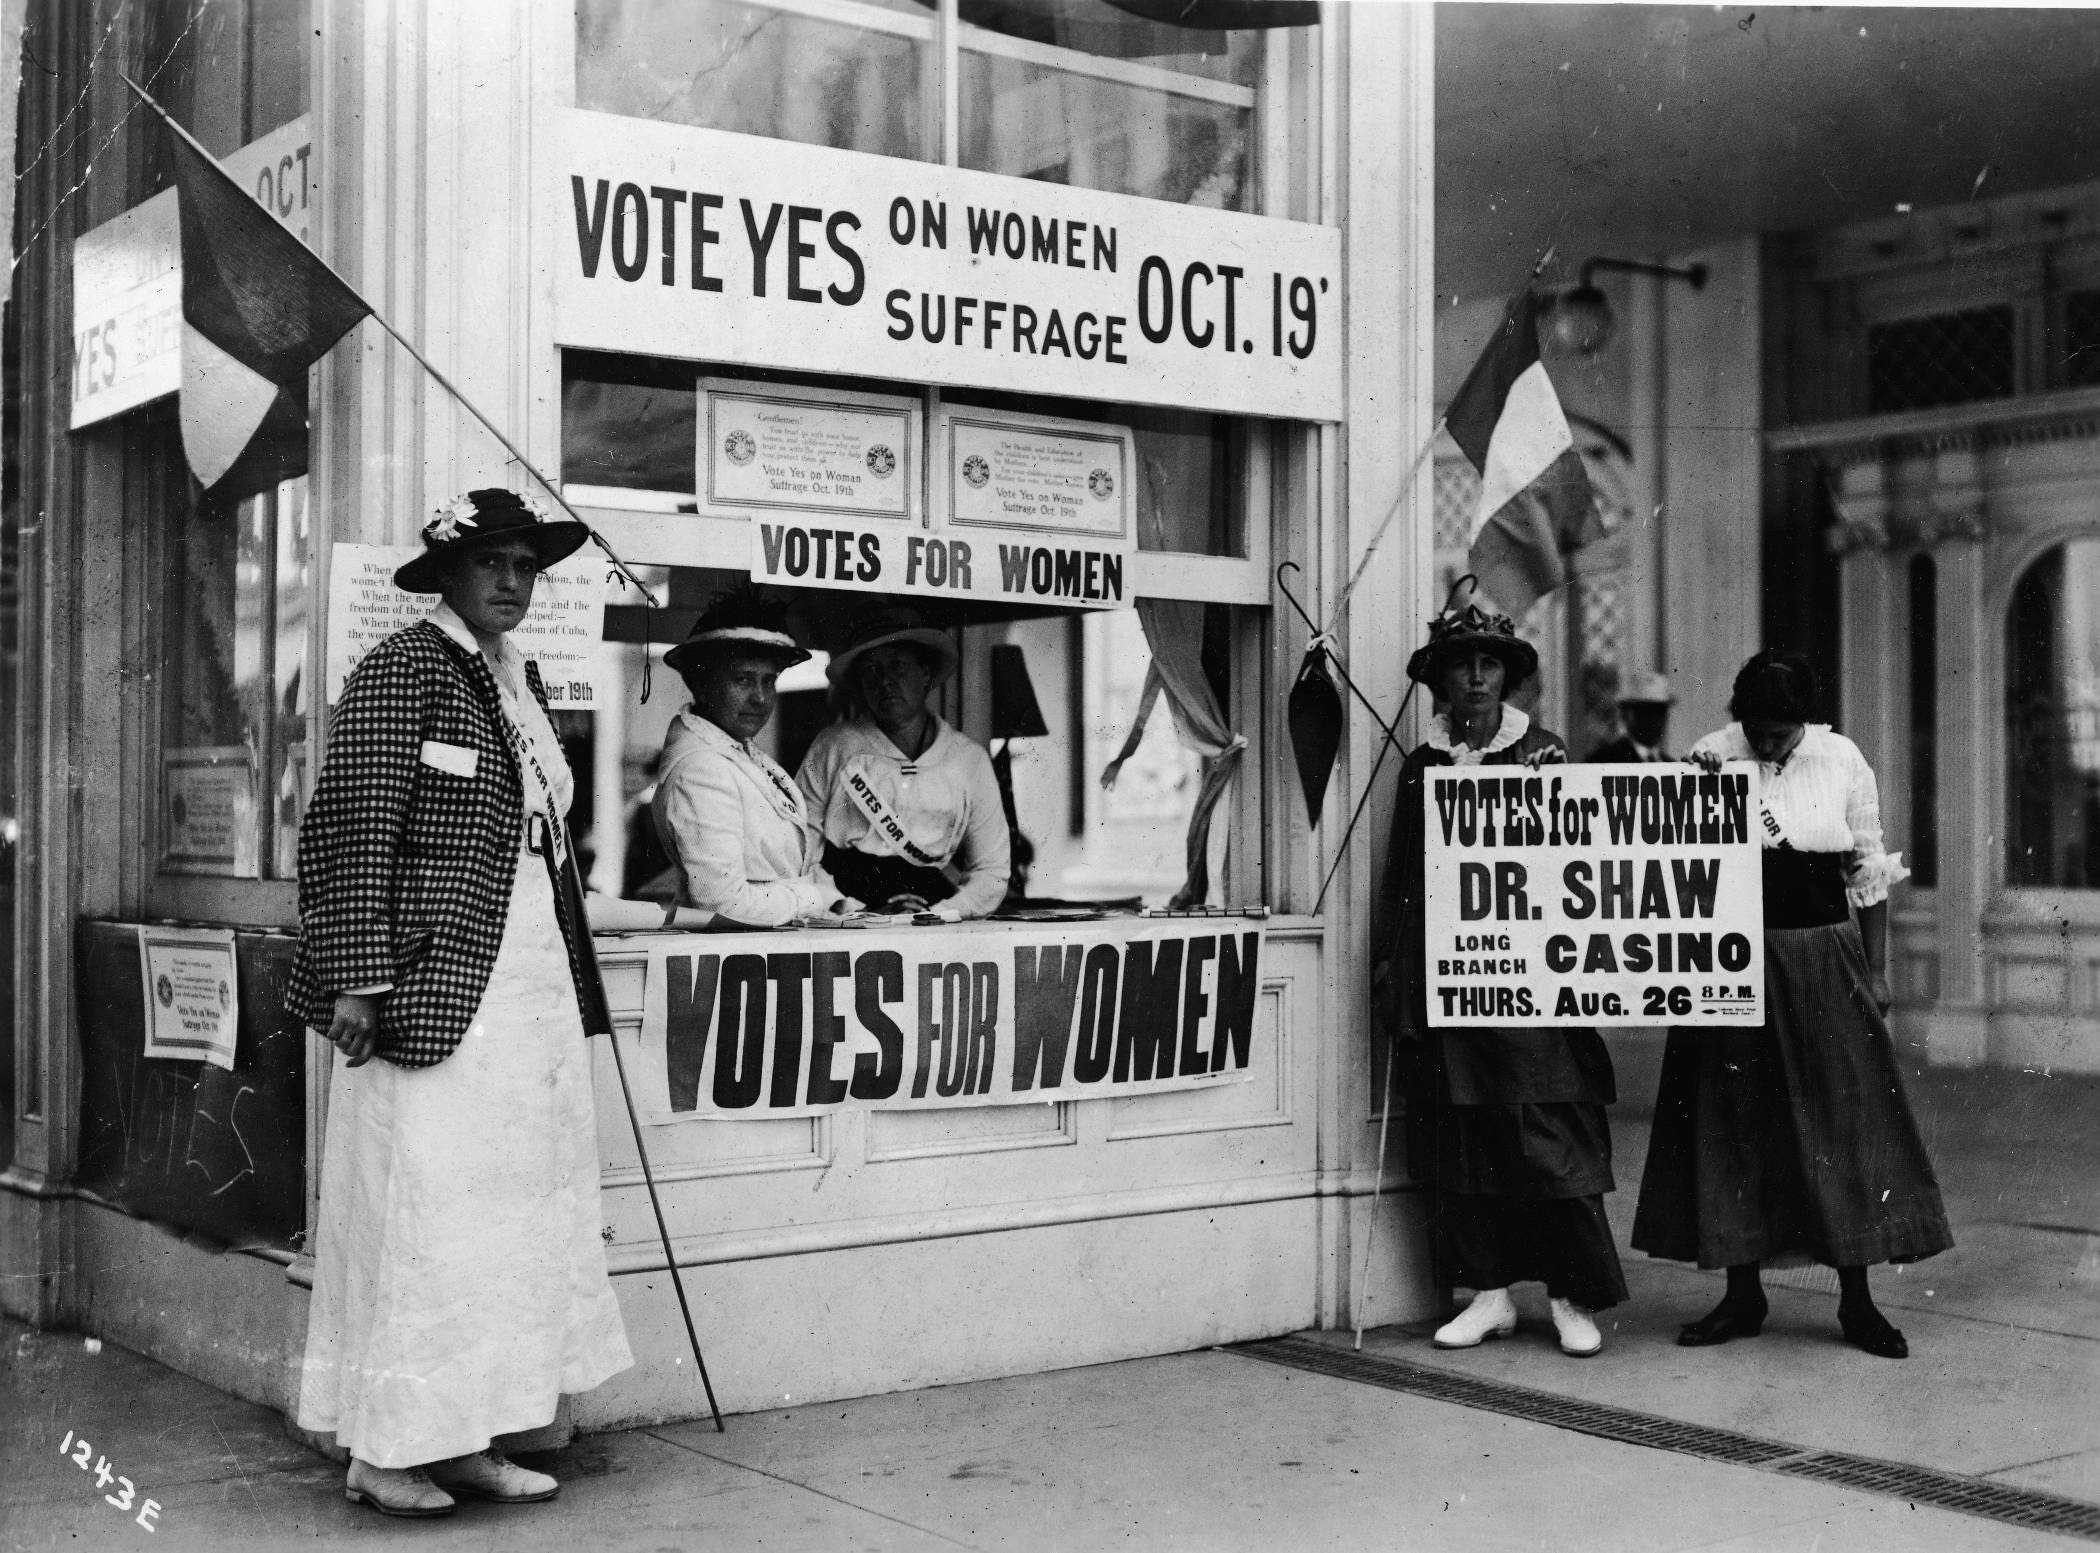 Right to vote. Суфражистки 19 века. Первая волна феминизма. Первая волна феминизма в США. Борьба за равноправие женщин.